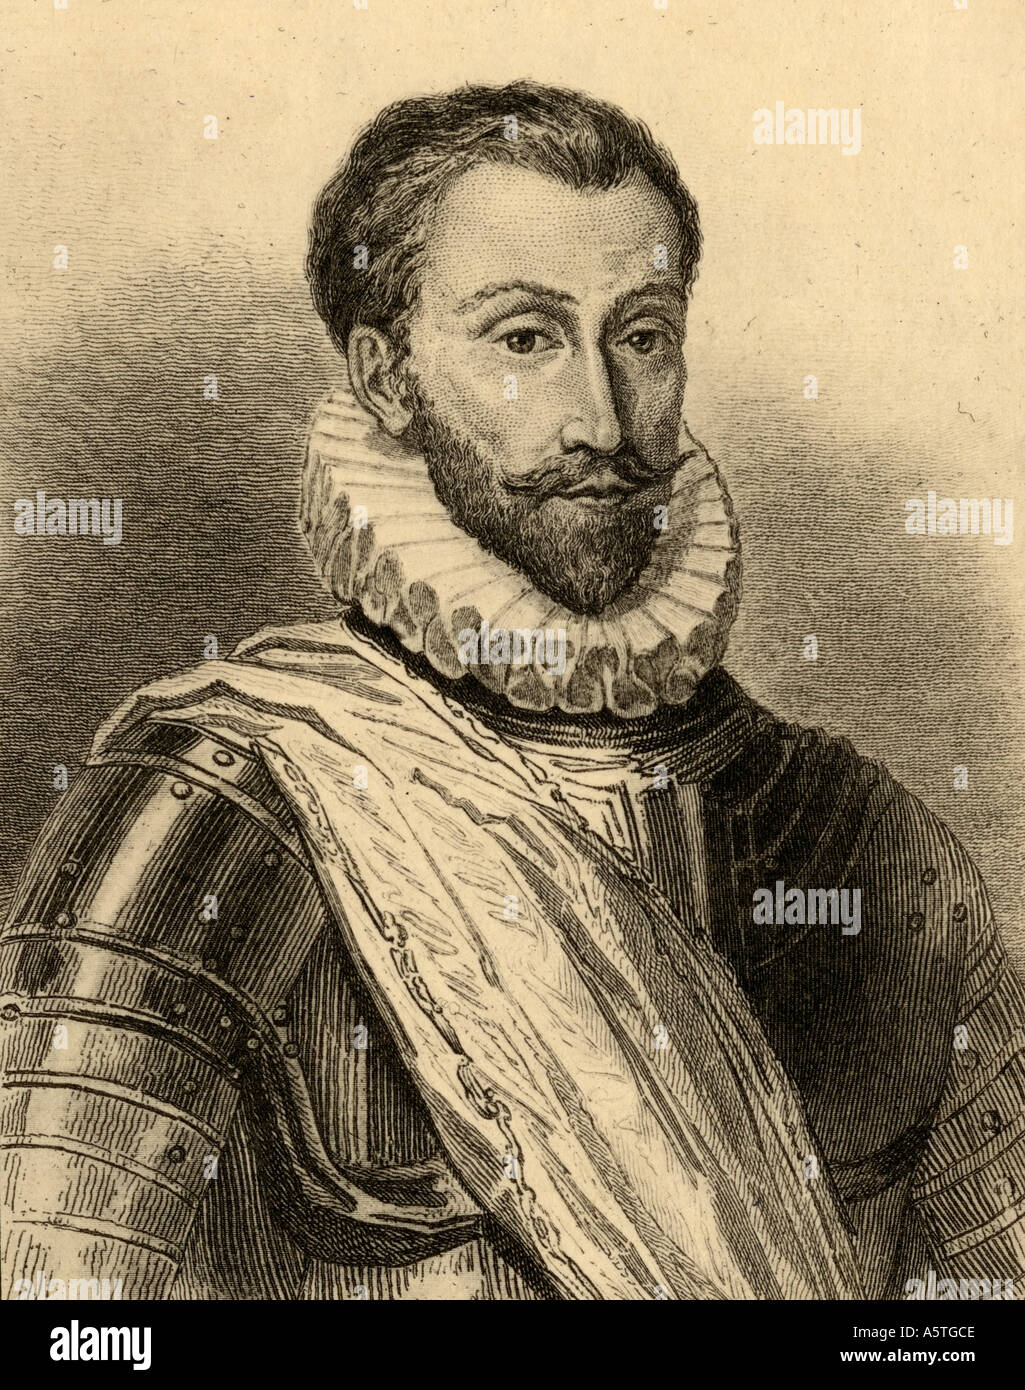 Francois de la Noue, called Bras-de-Fer, 1531 - 1591. Huguenot captain in the French wars of religion. Stock Photo